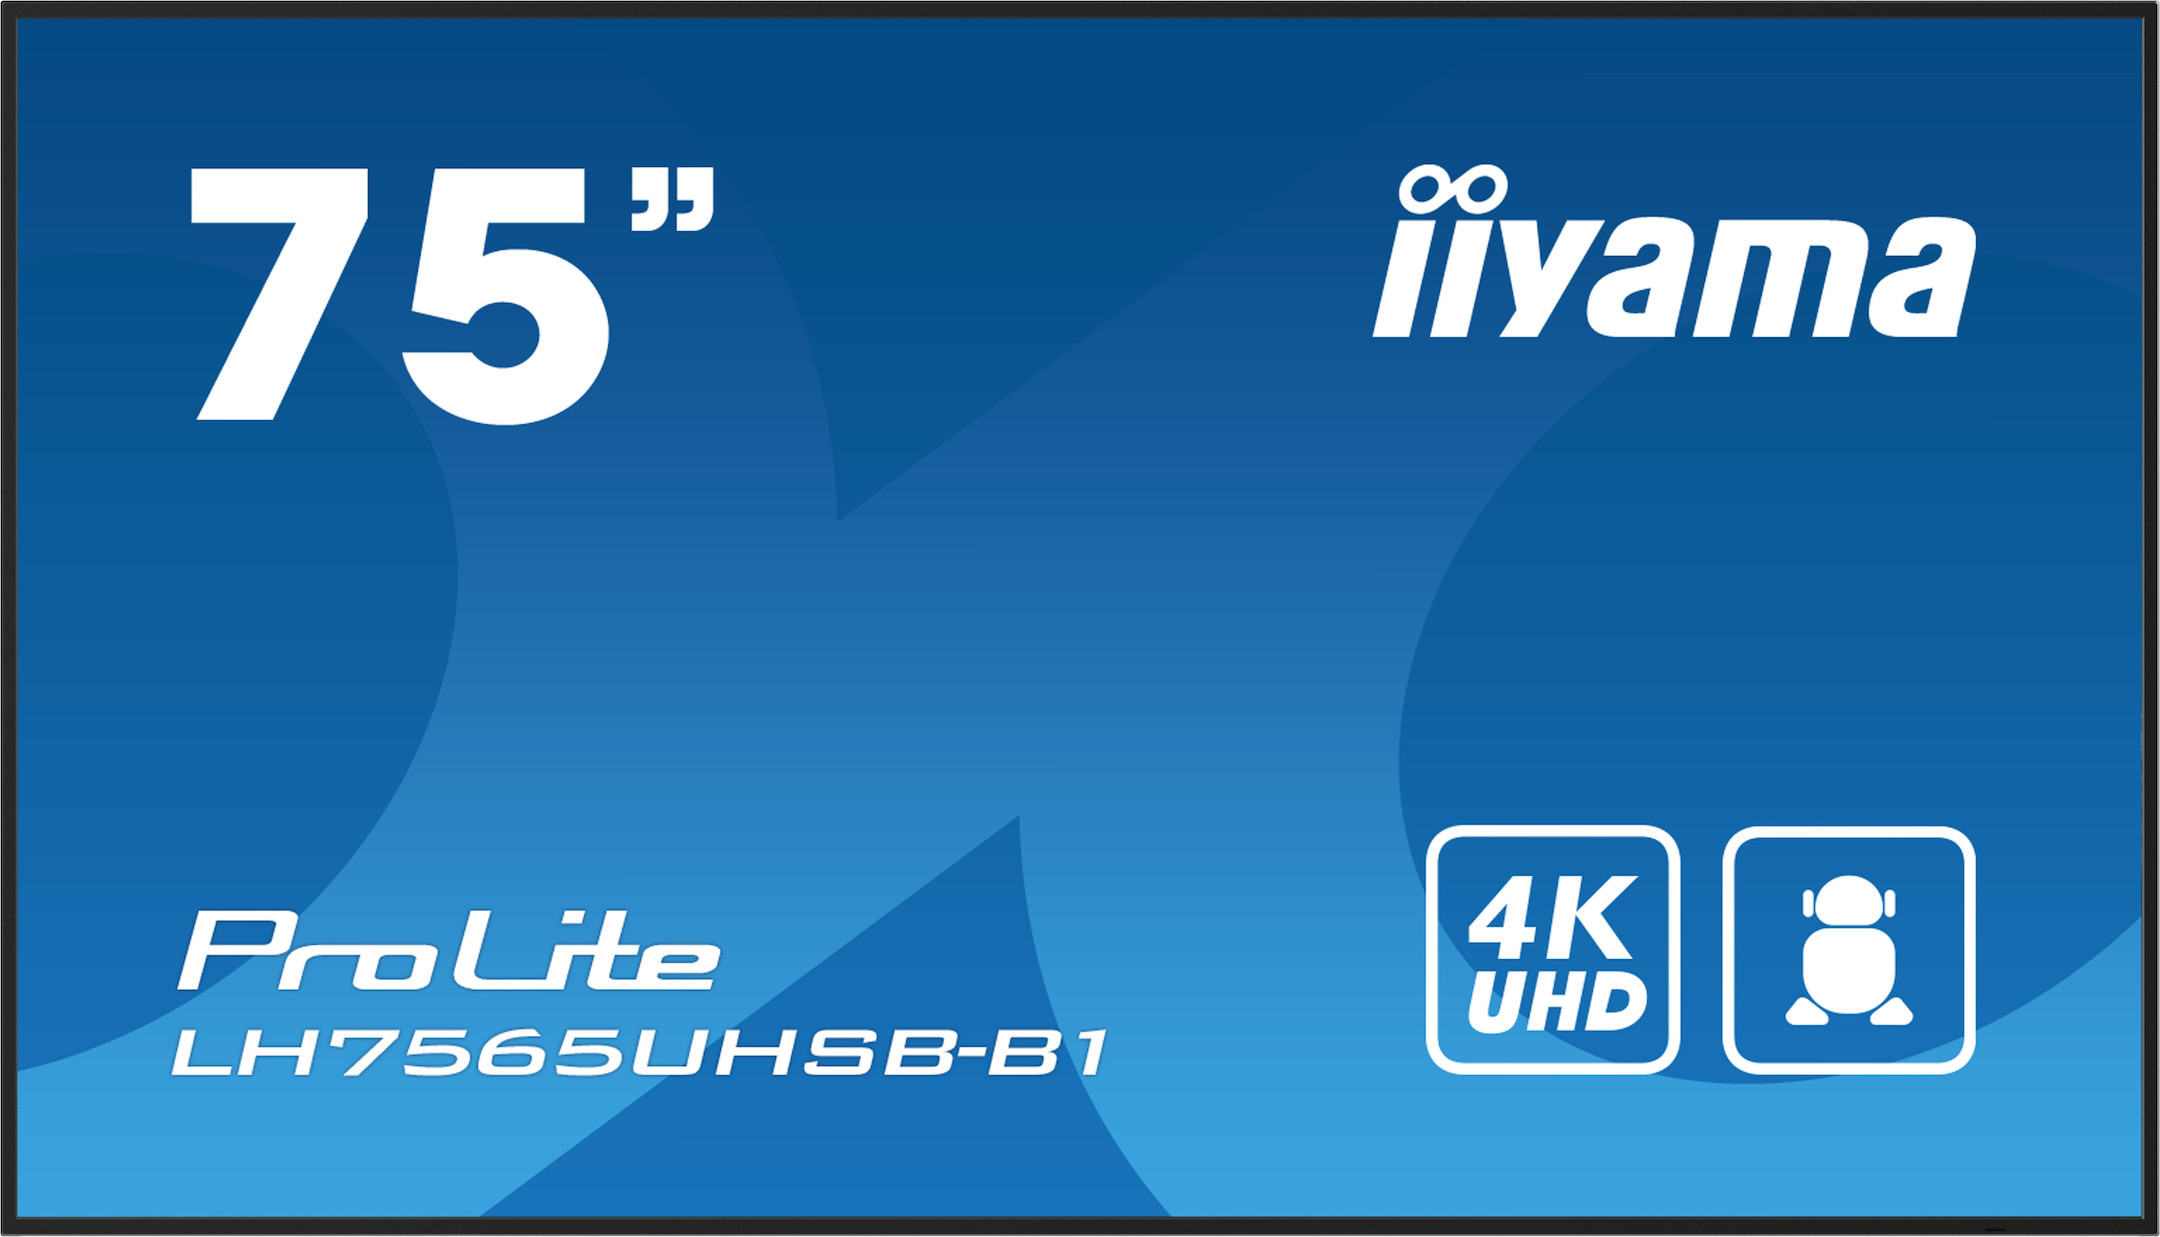 iiyama-PROLITE-LH7565UHSB-B1